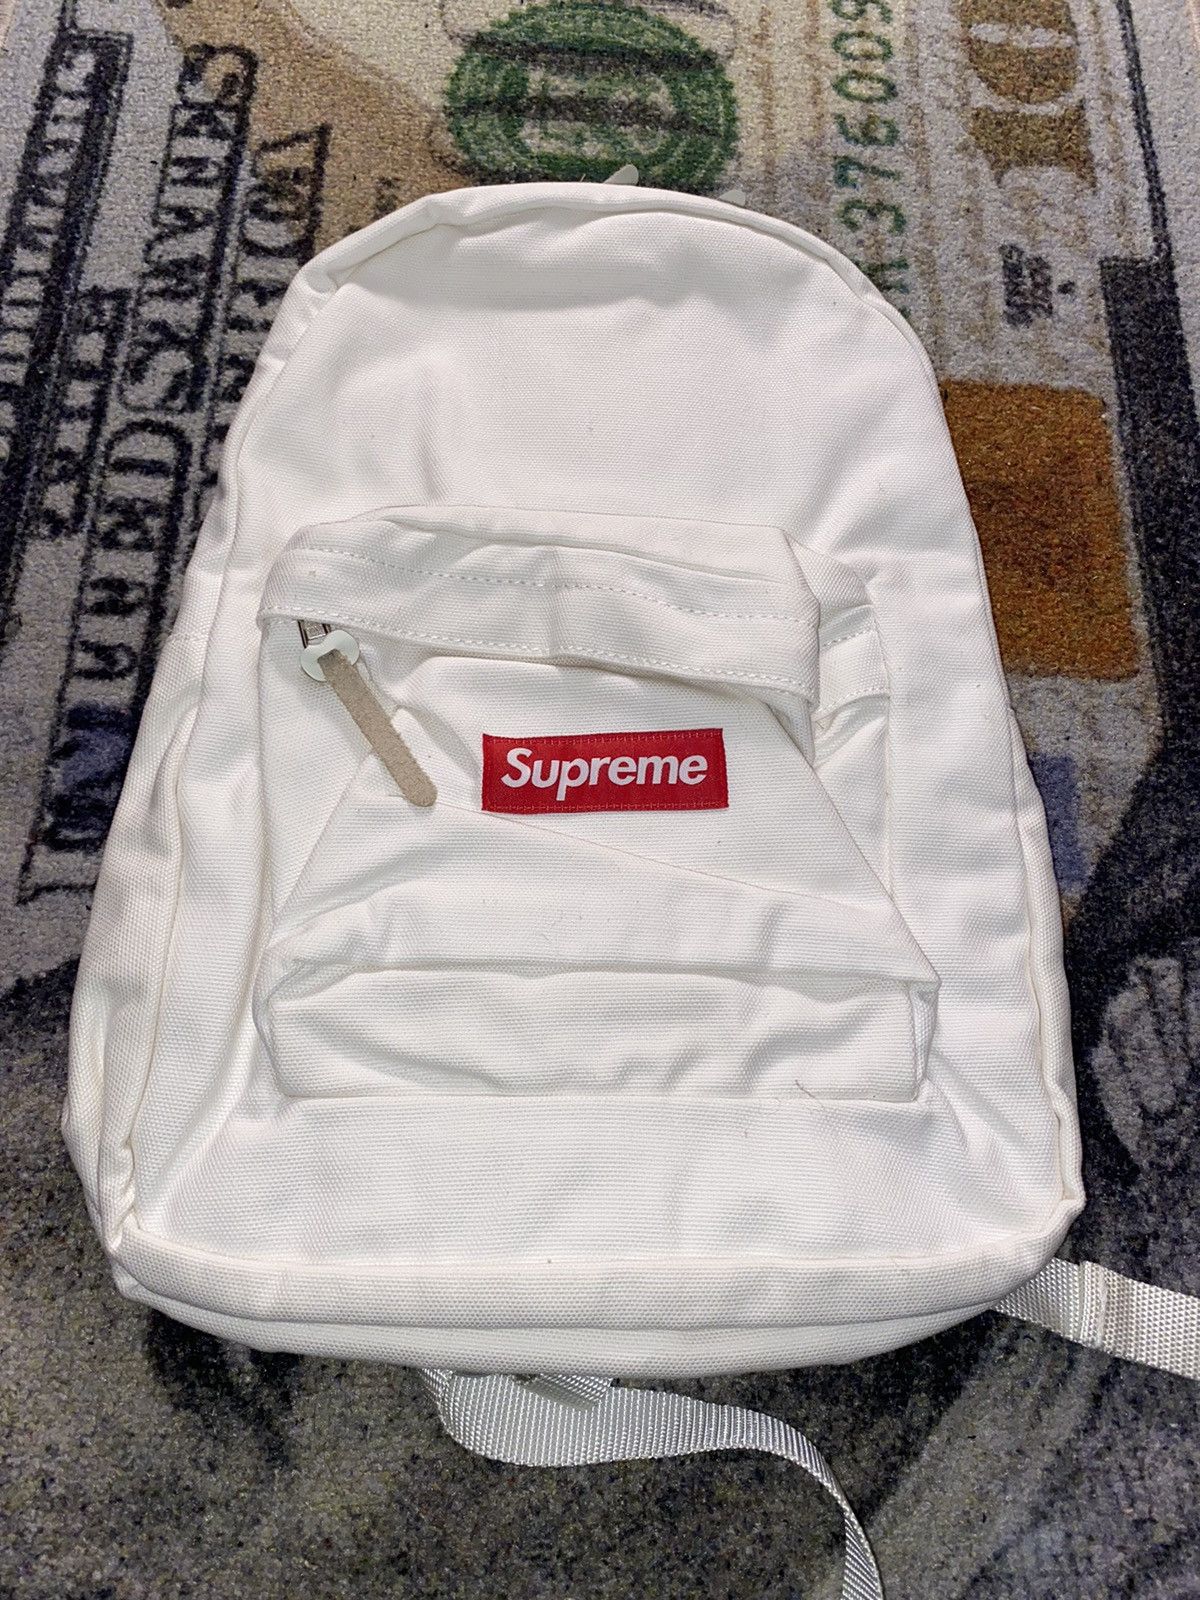 Supreme Supreme Canvas Backpack | Grailed